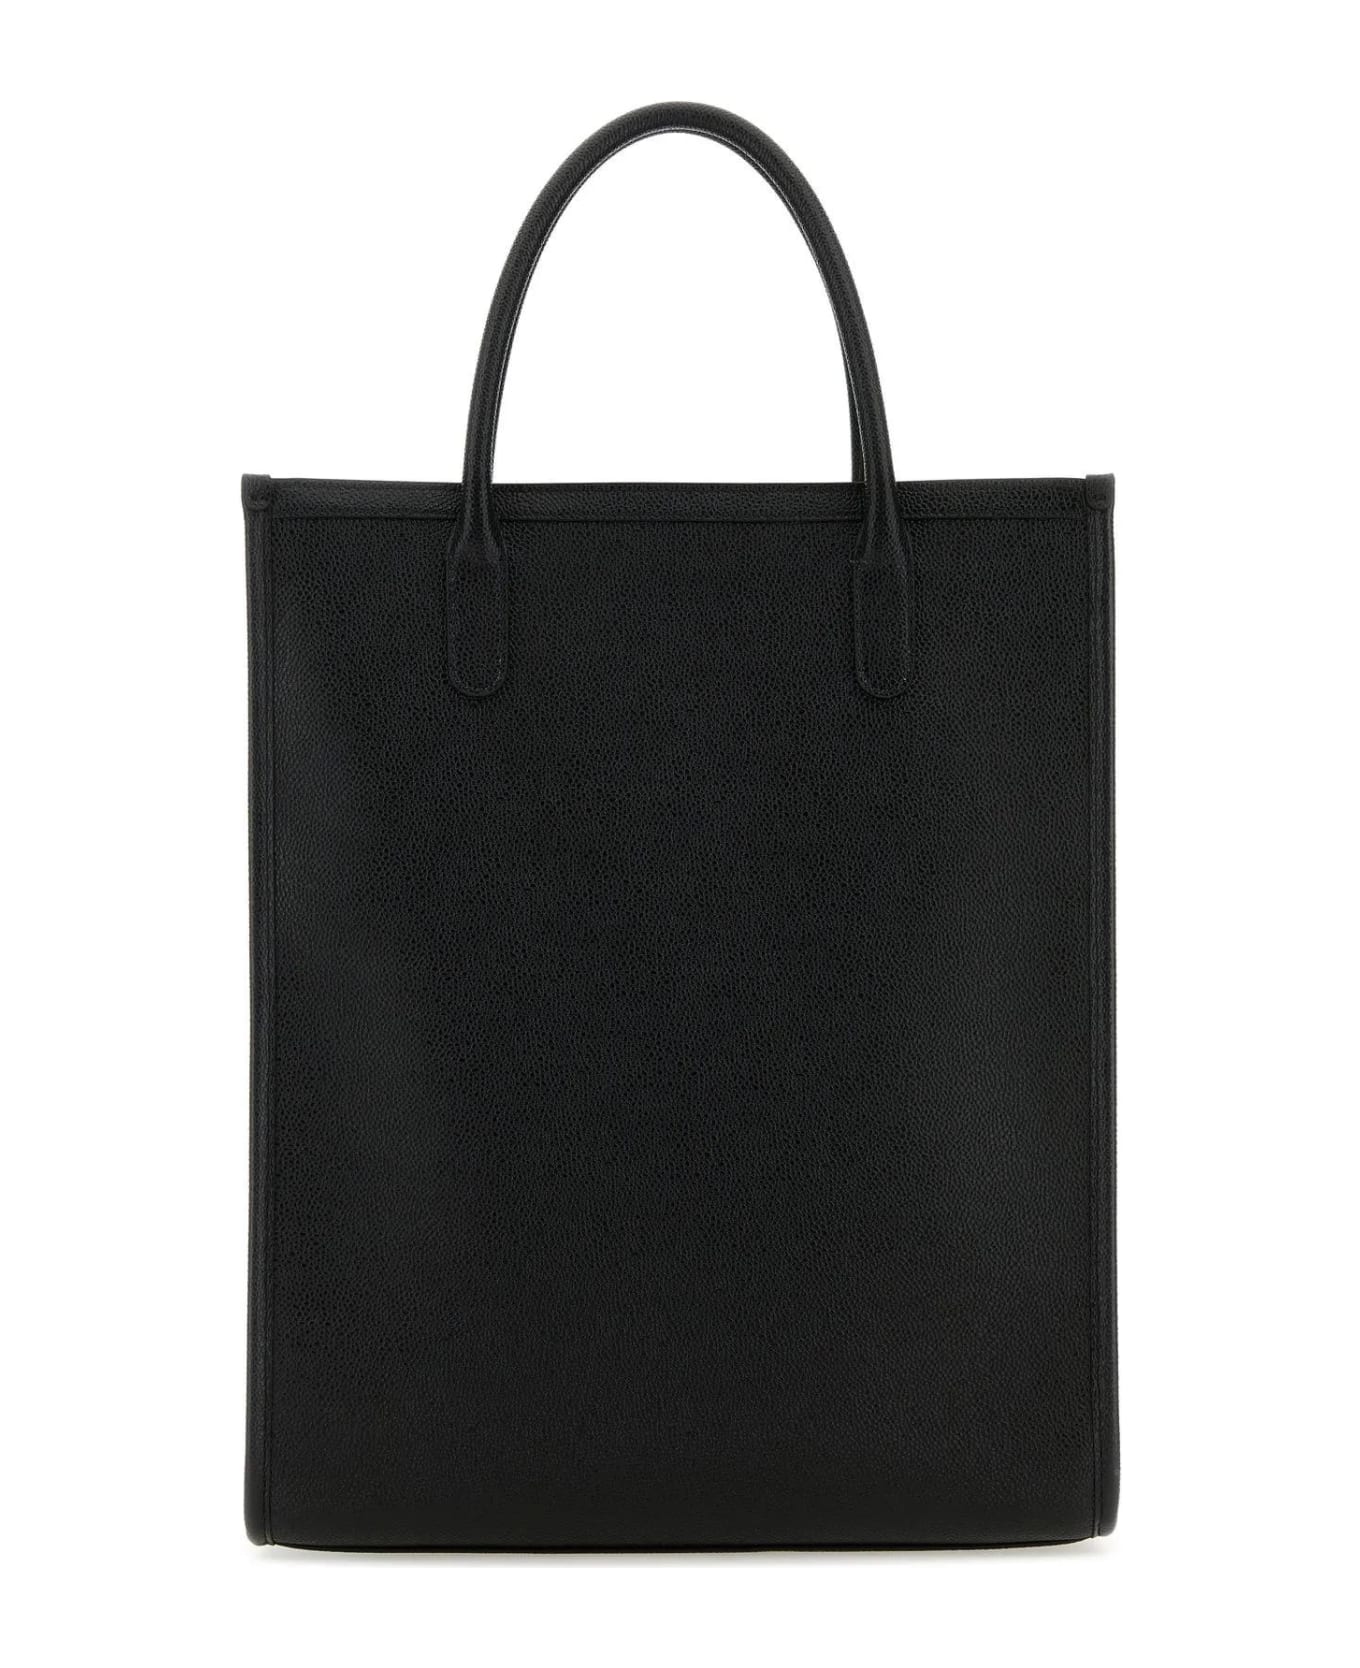 Thom Browne Black Leather Vertical Tote Handbag - Black